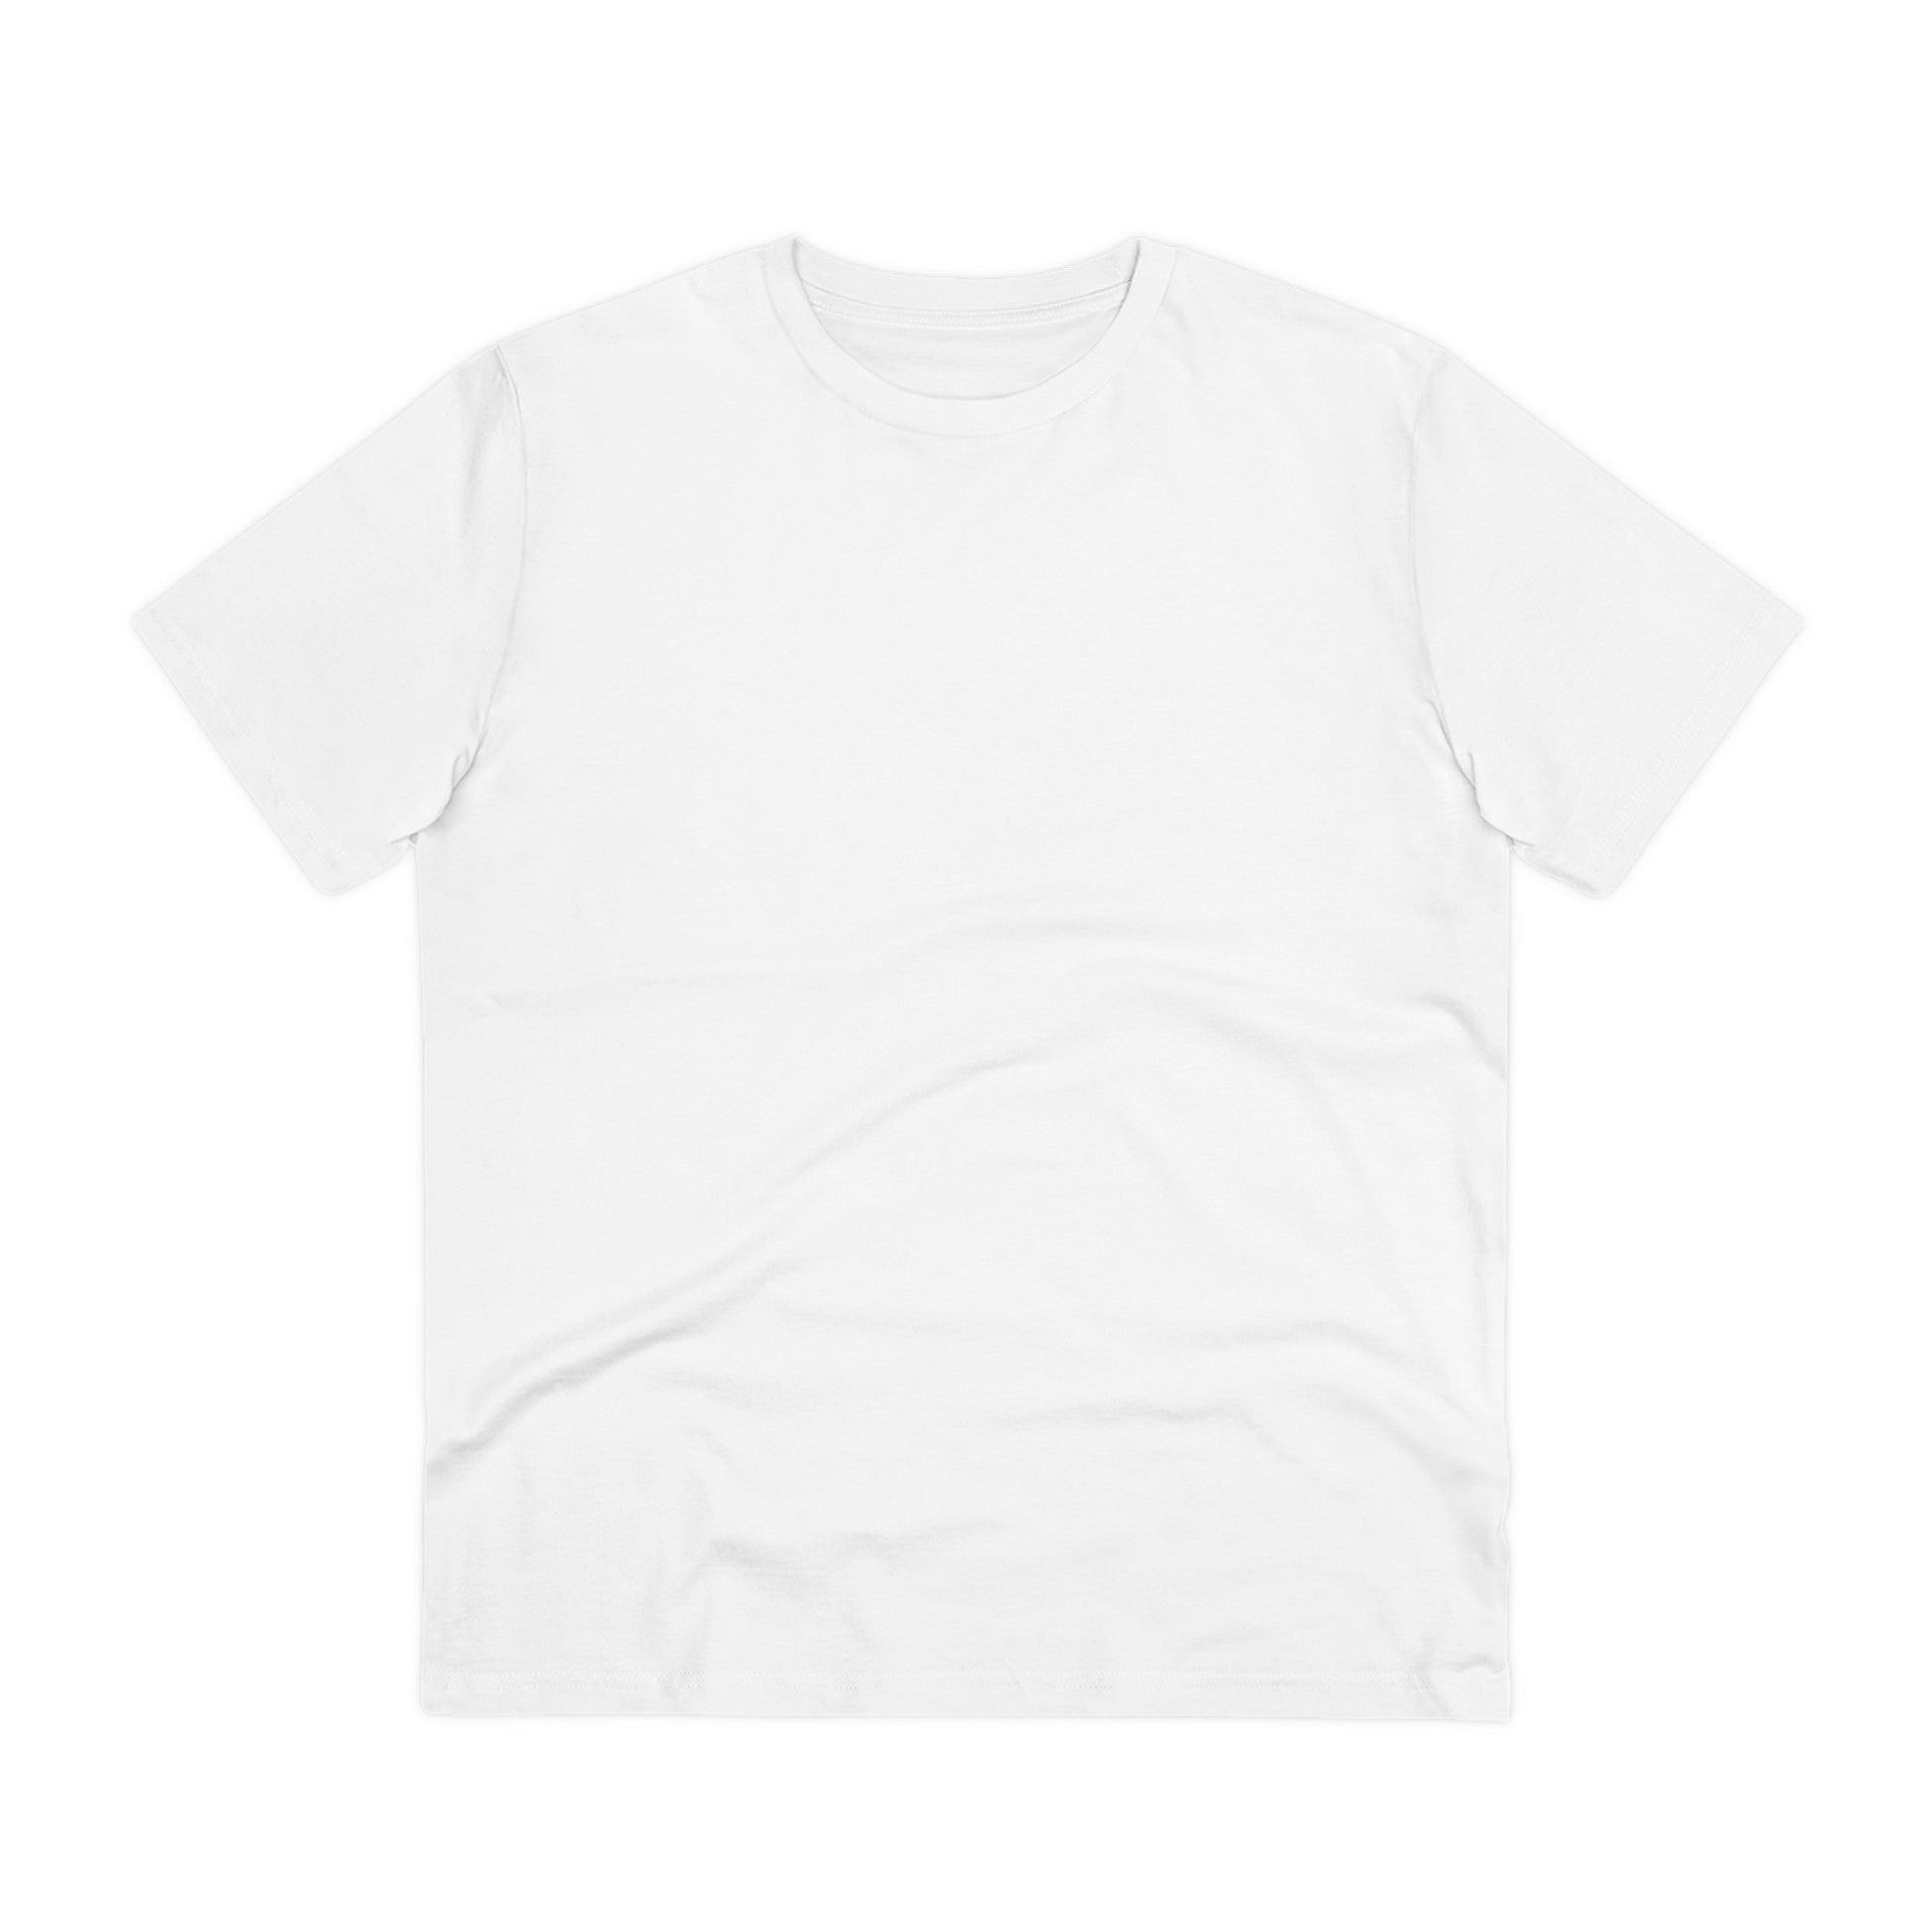 Printify T-Shirt Ramen Girl Just a Girl who like Anime & Ramen - Anime World - Back Design